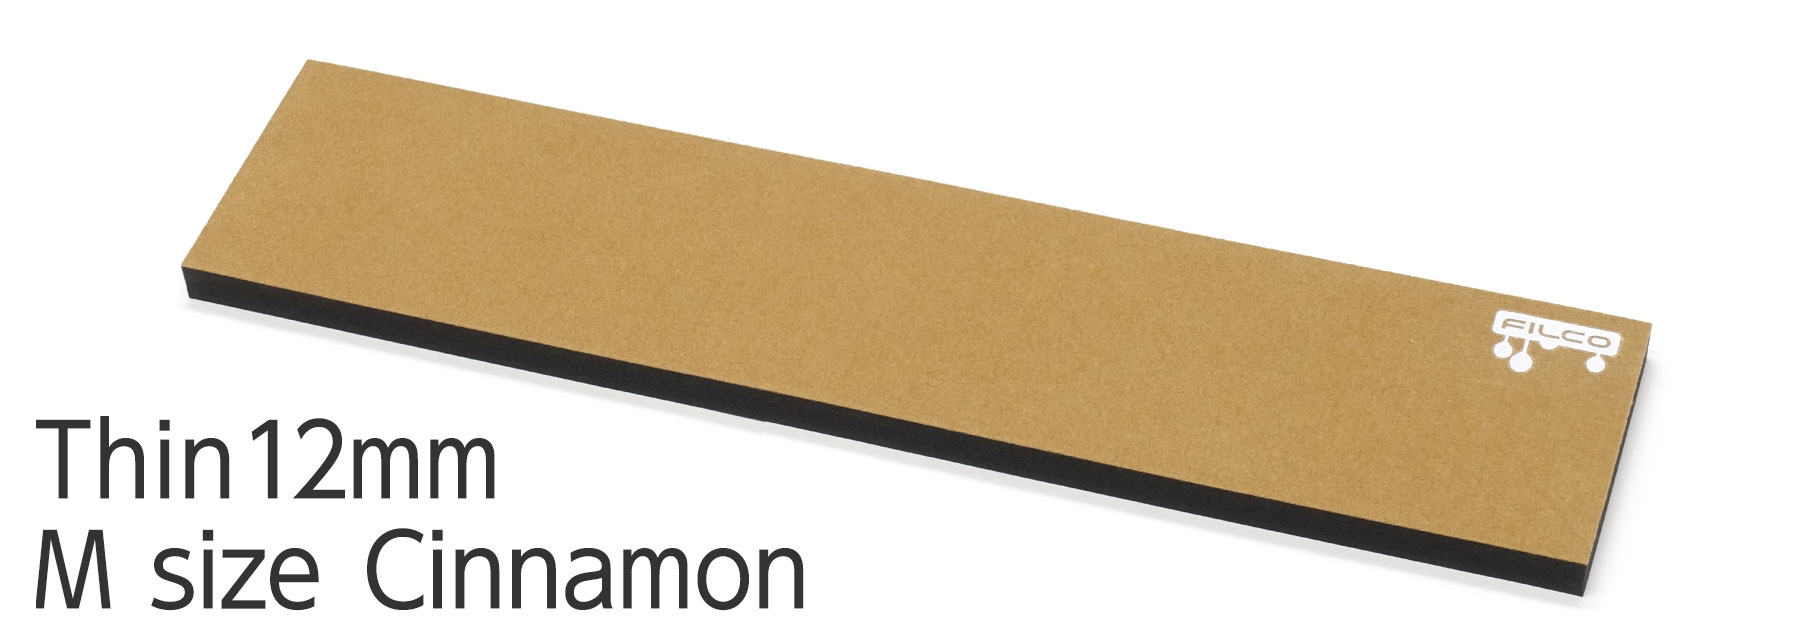 FILCO Majestouch Wrist Rest "Macaron" Thin 12mm / M size / Cinnamon